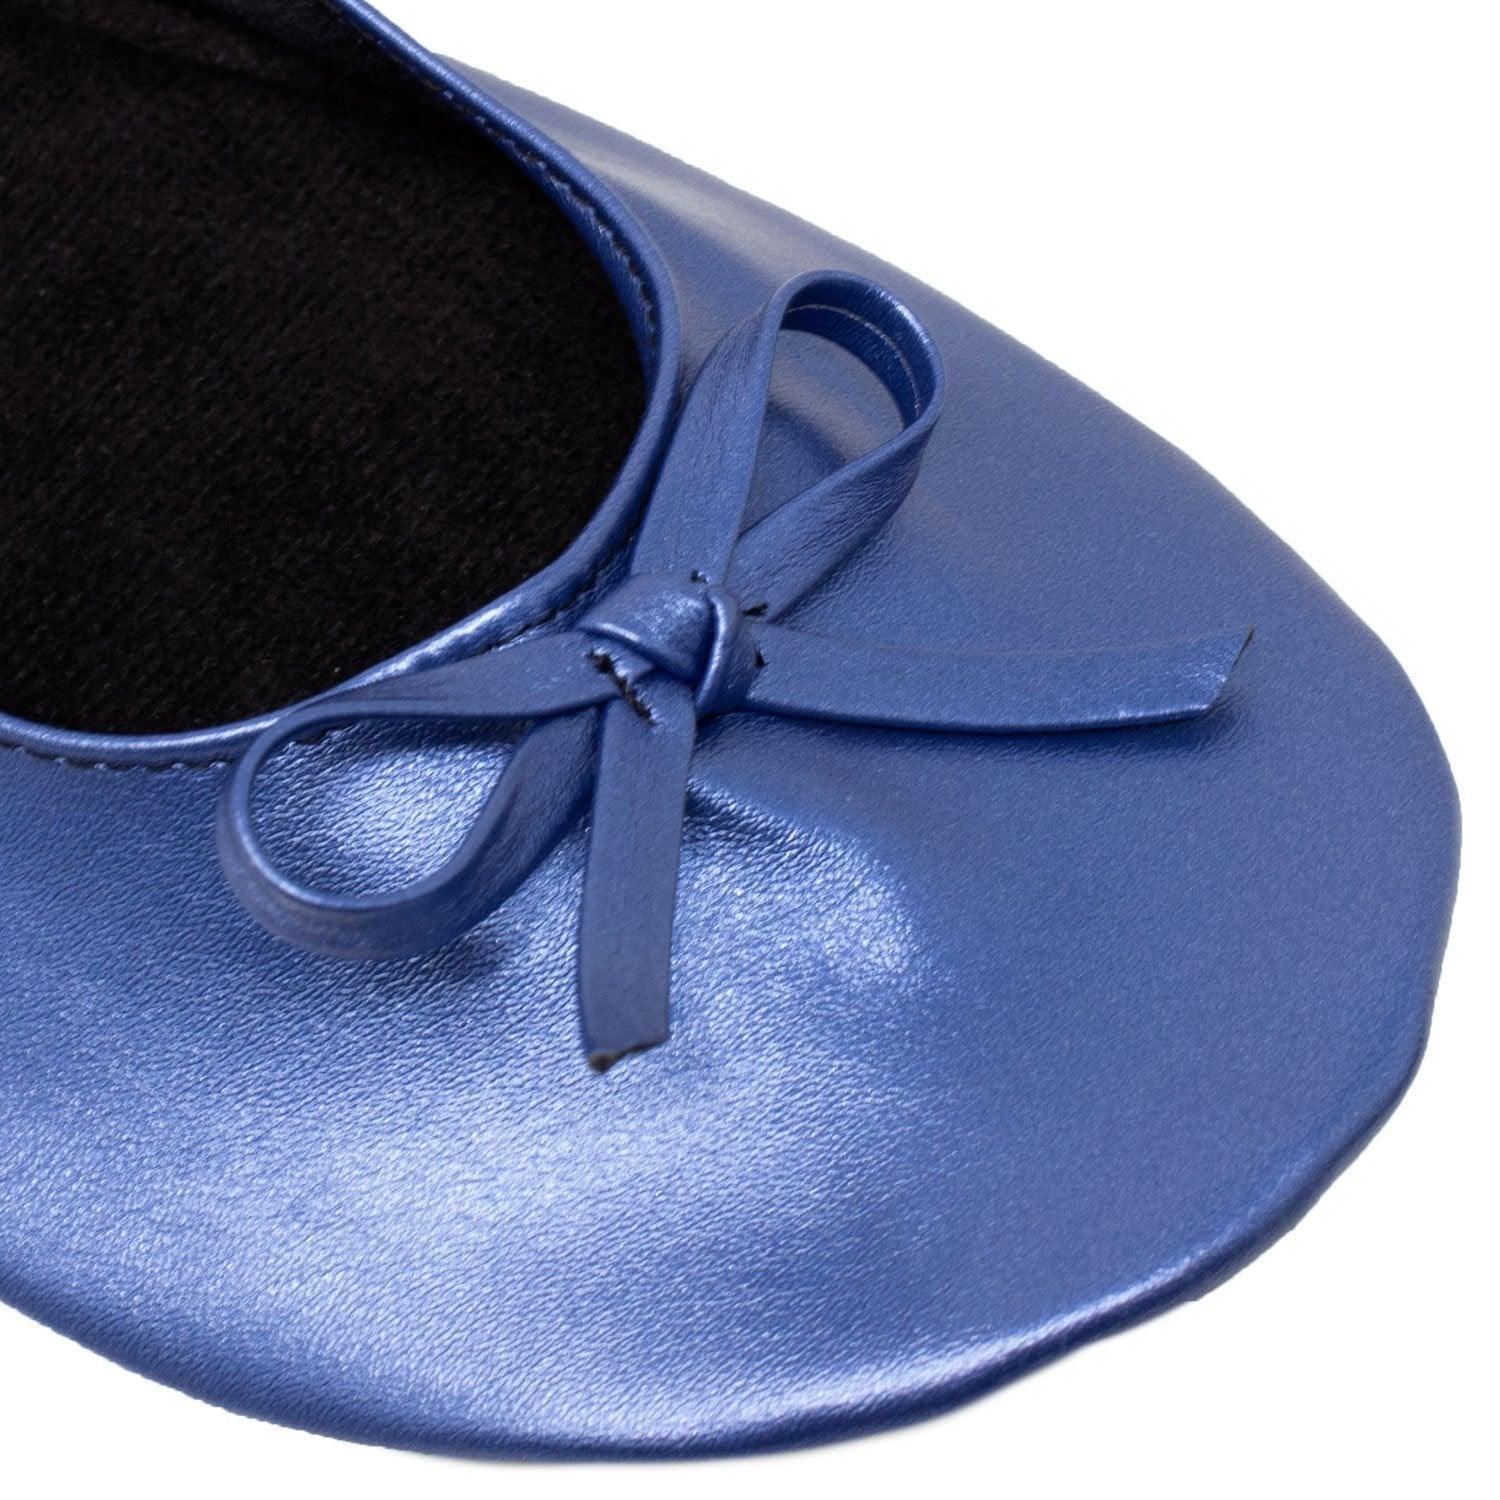 Women's Shoes - Flats Navy Blue Ballet Flats Womens Travel Portable Comfortable Shoes